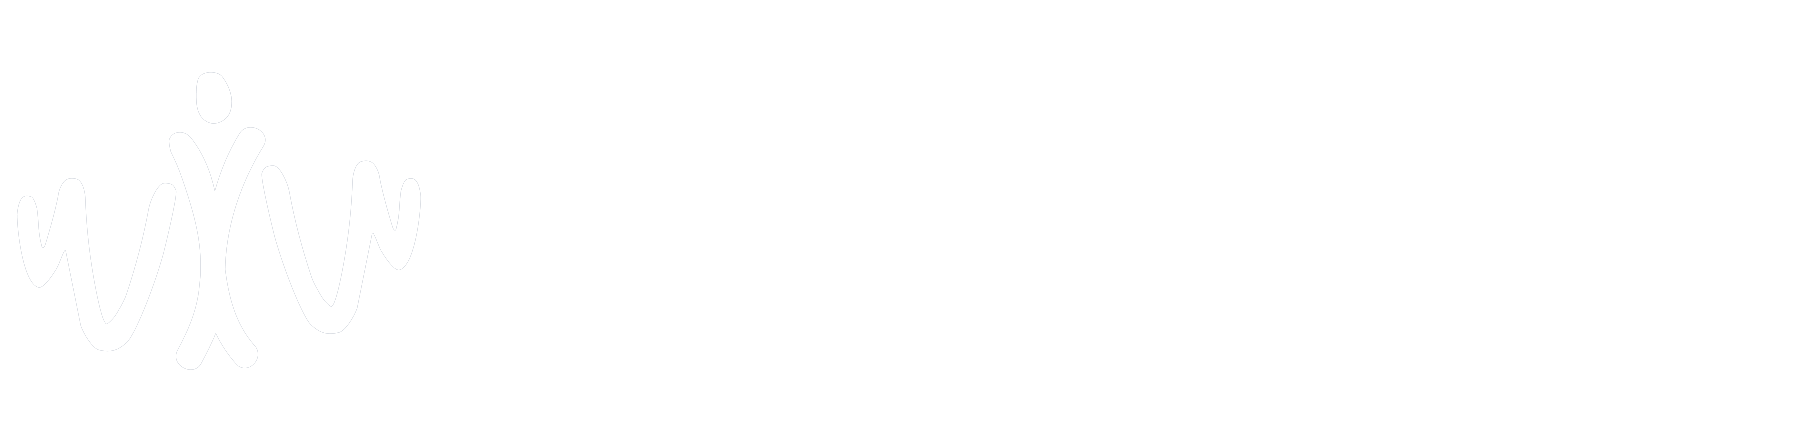 WINg WINg International